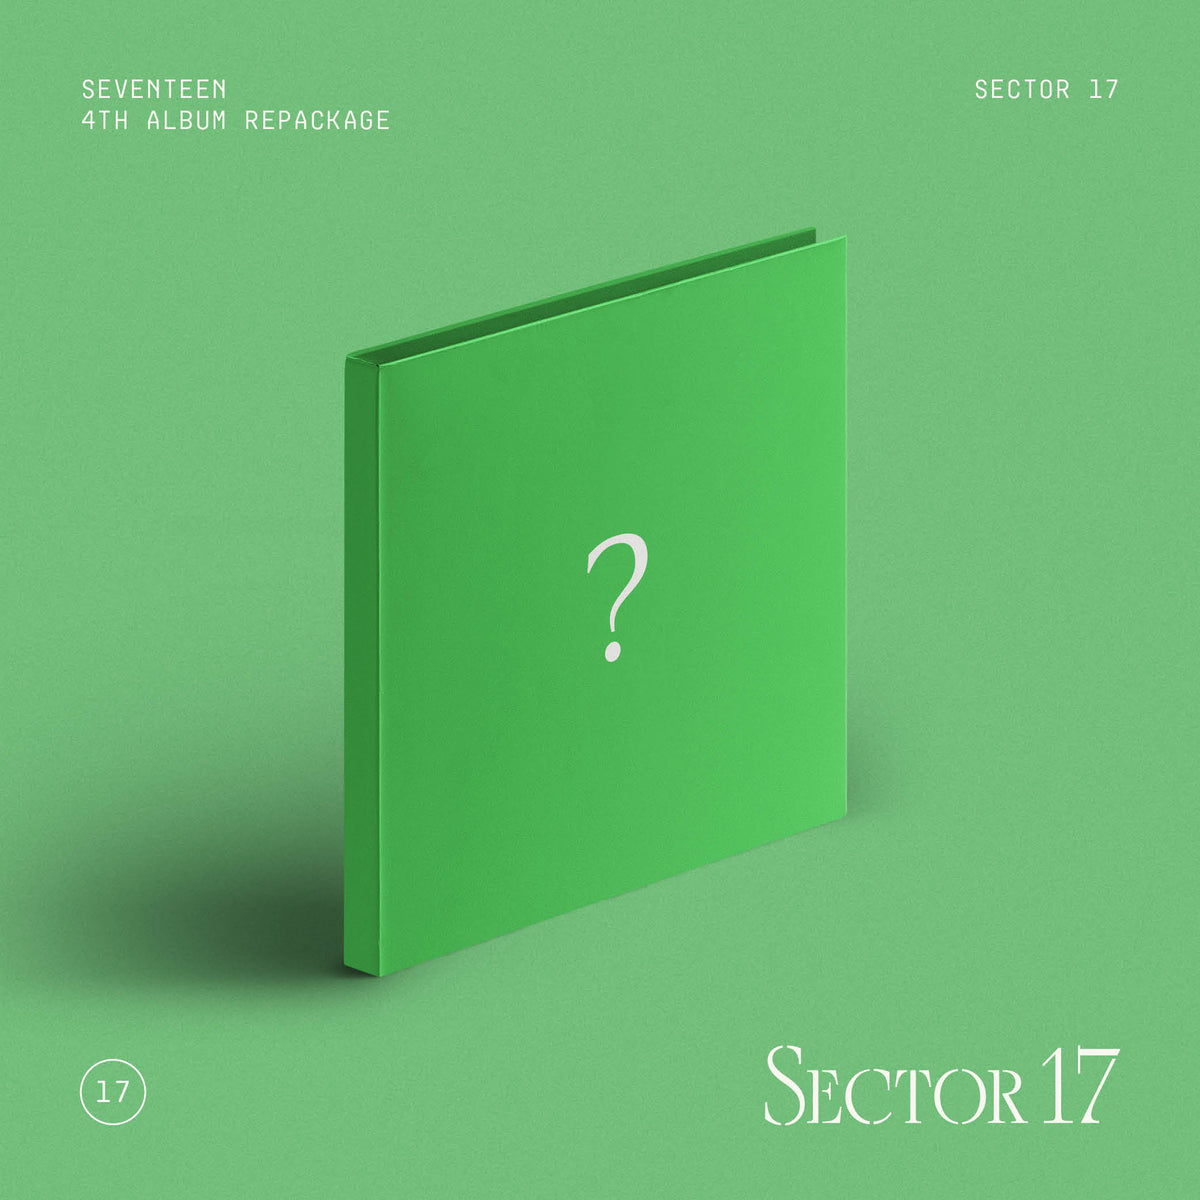 SEVENTEEN - 4th Album Repackage - SECTOR 17 (Compact ver)